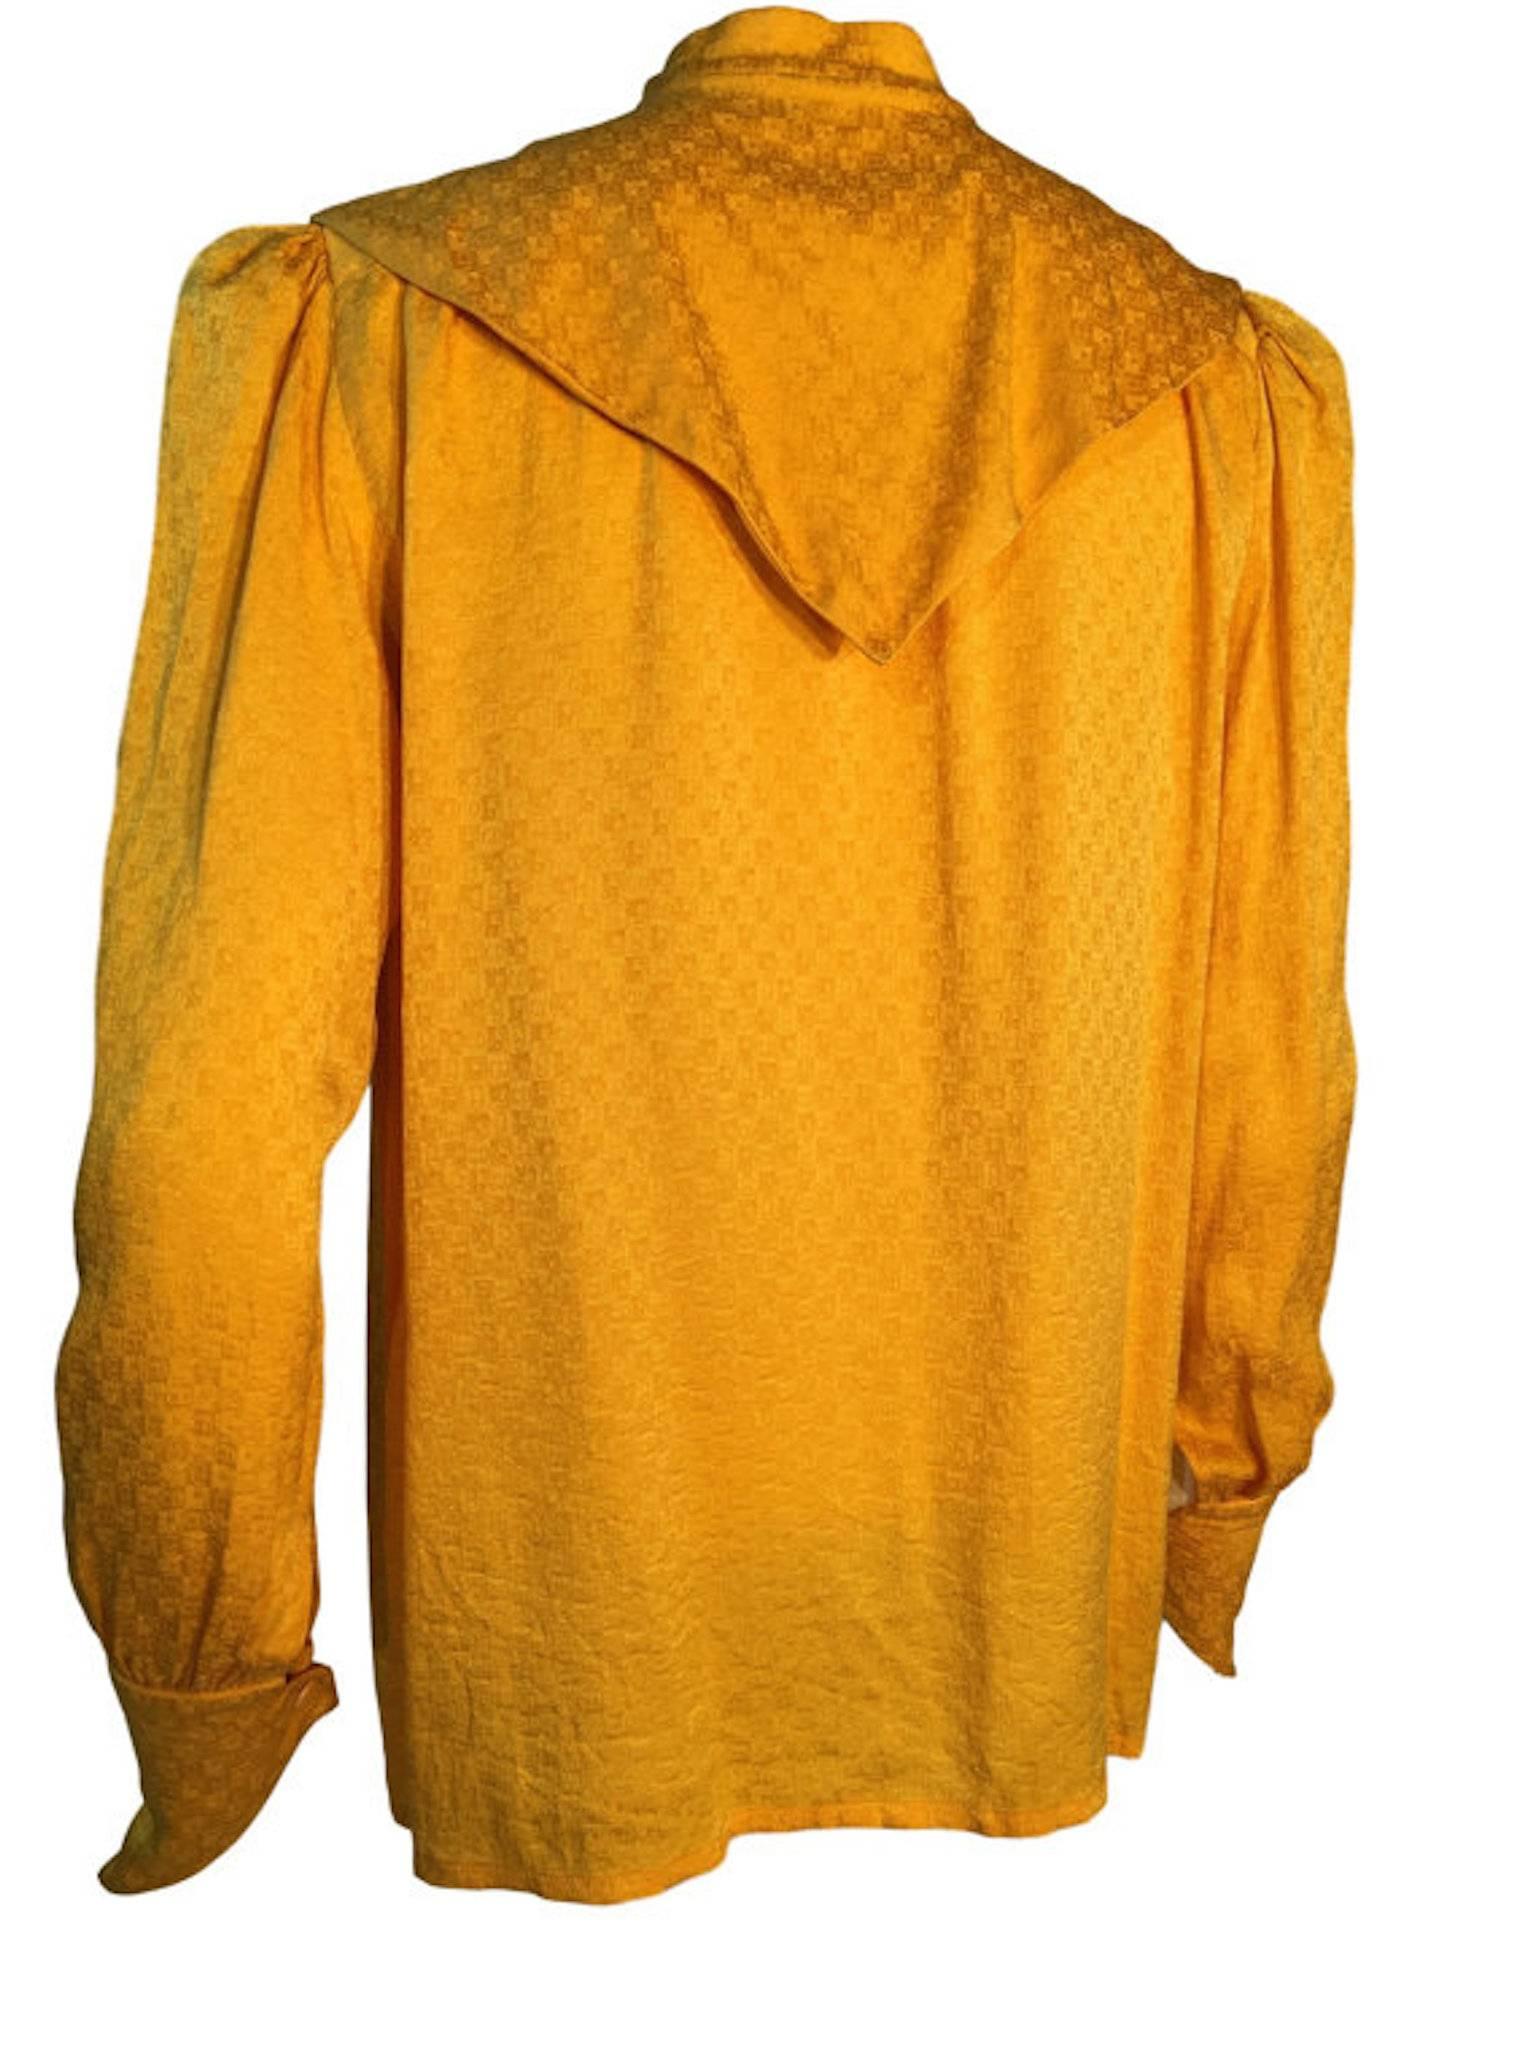 Orange Christian Dior 1970s vintage 100% Silk Monogrammed Blouse Shirt UK 10